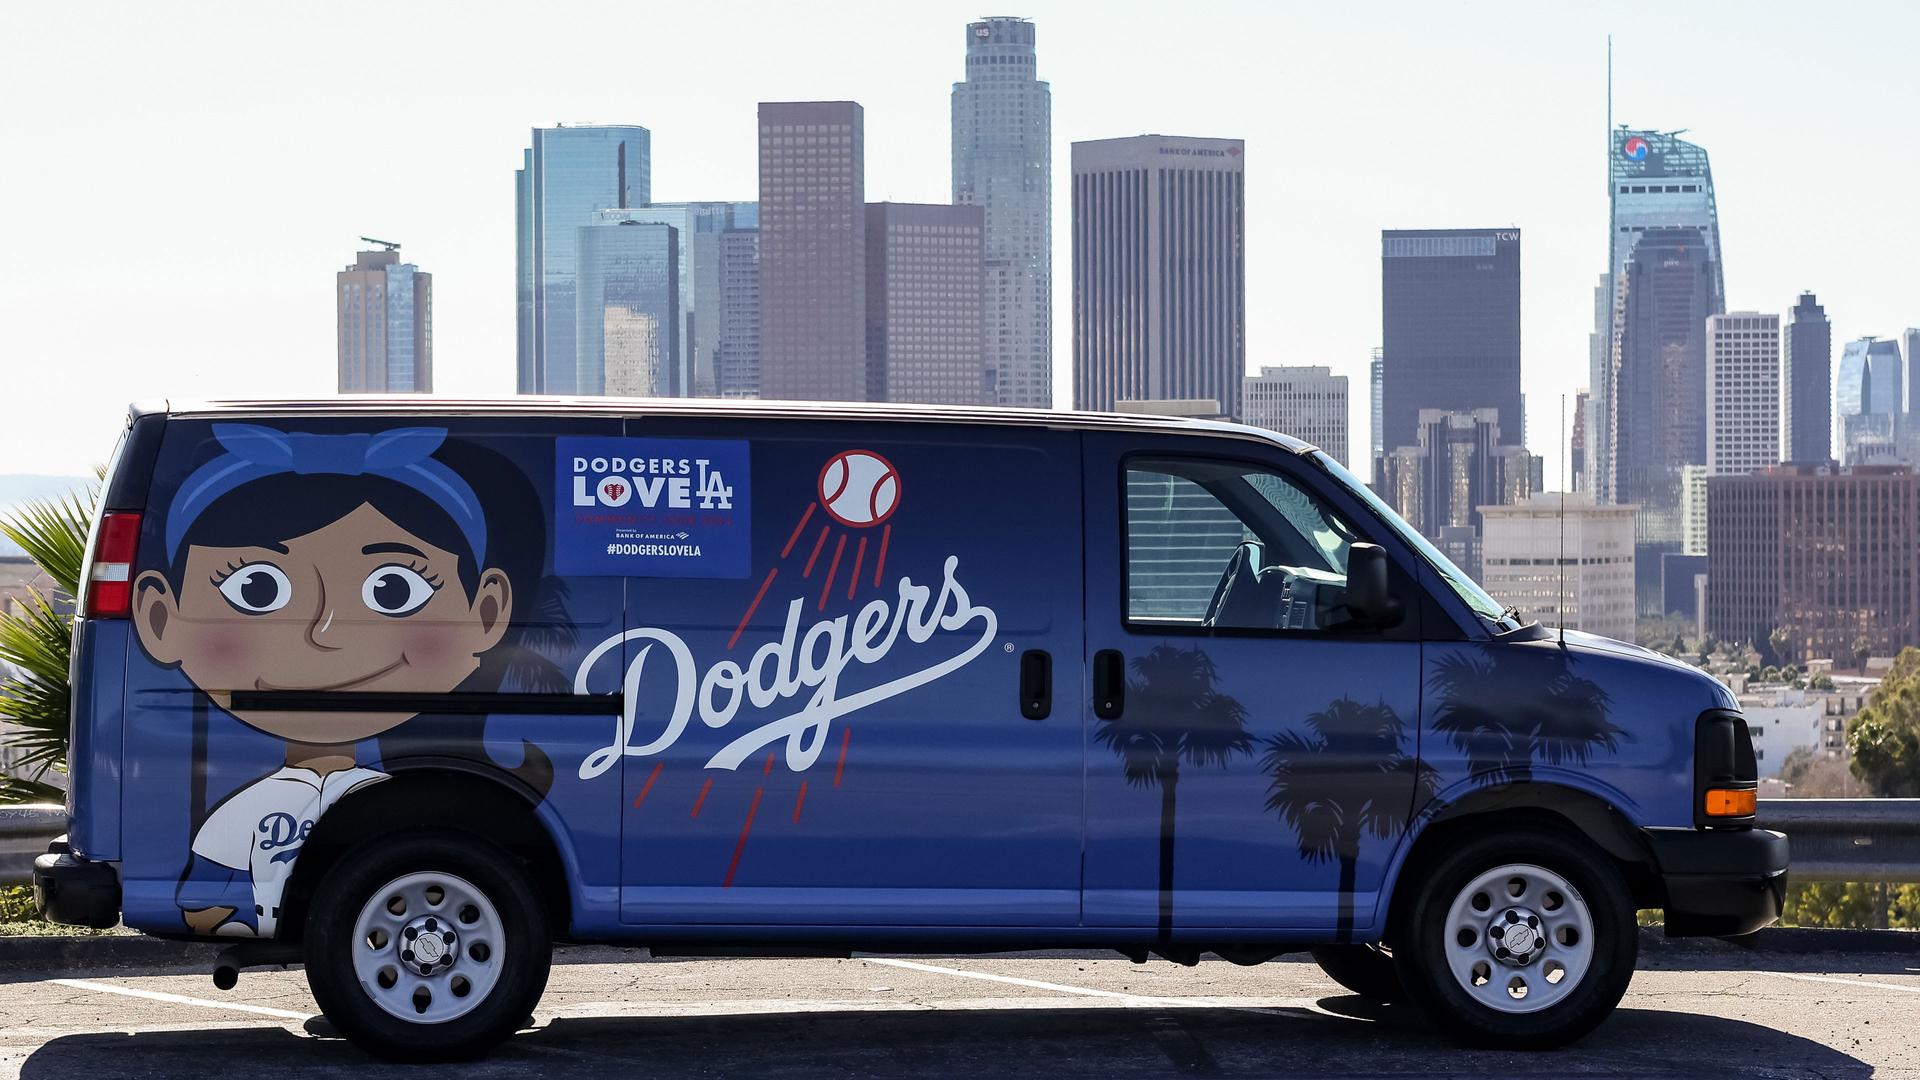 Dodgers van and L.A. skyline